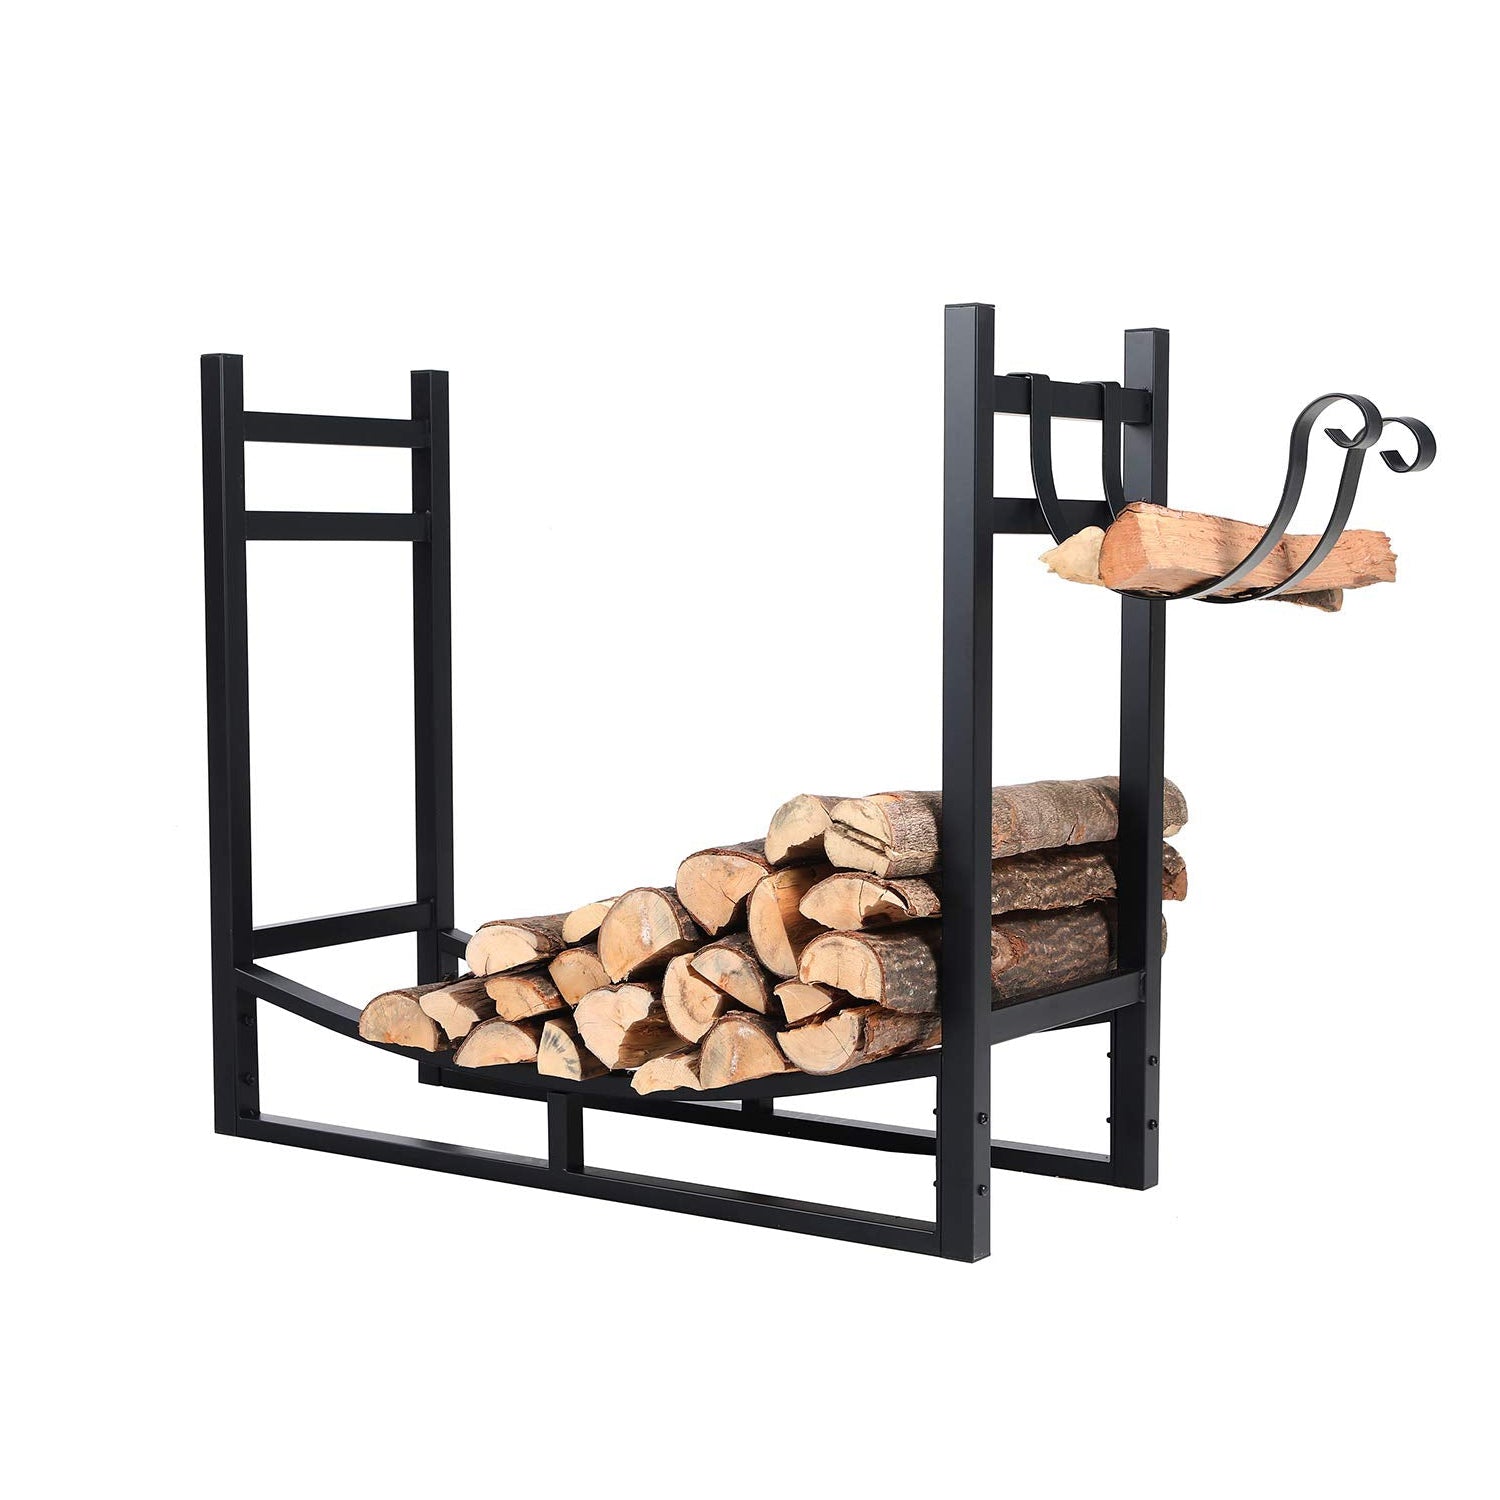 PHI VILLA Heavy Duty Firewood Racks Indoor/Outdoor Log Rack with Kindling Holder, 30 Inches Tall, Black